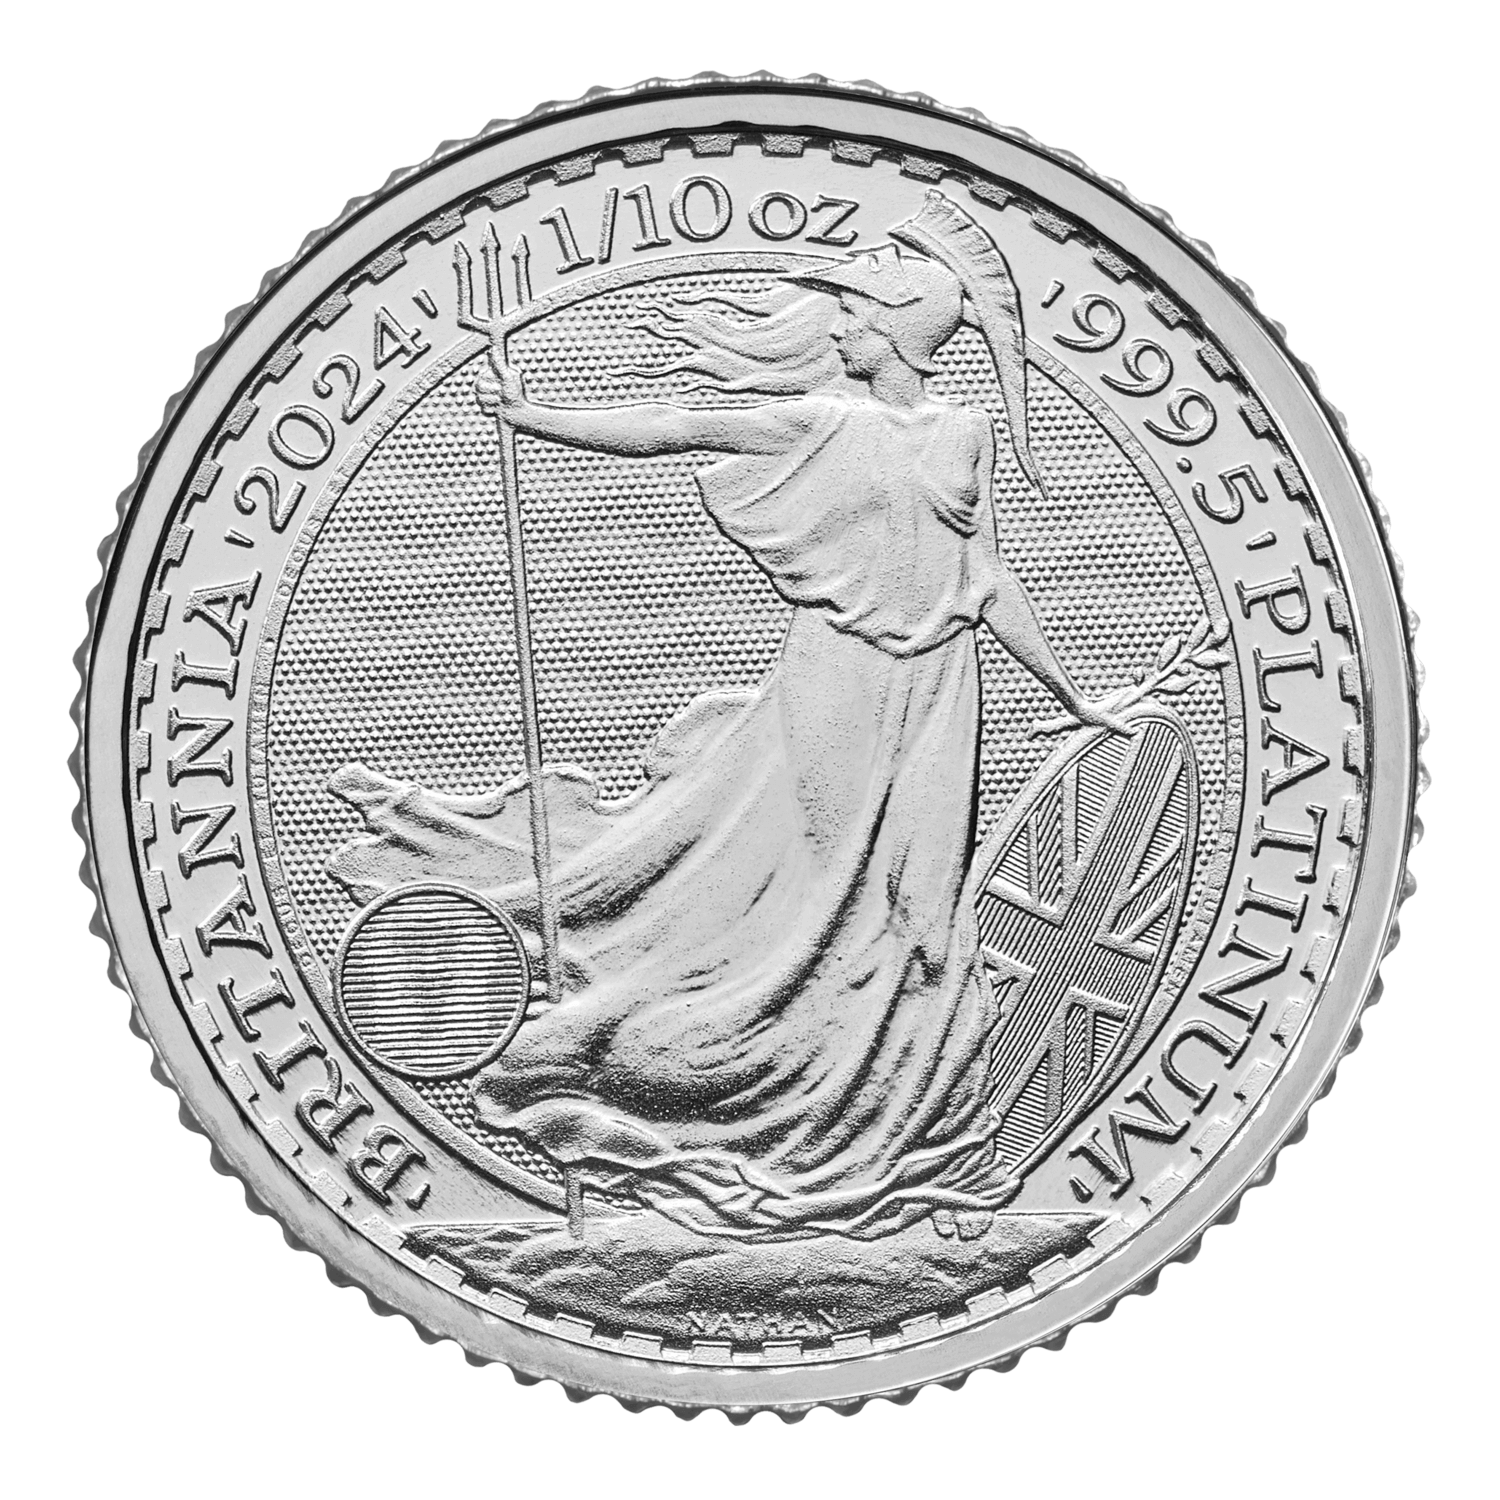 1/10th oz. Platinum Britannia bullion coin - reverse side